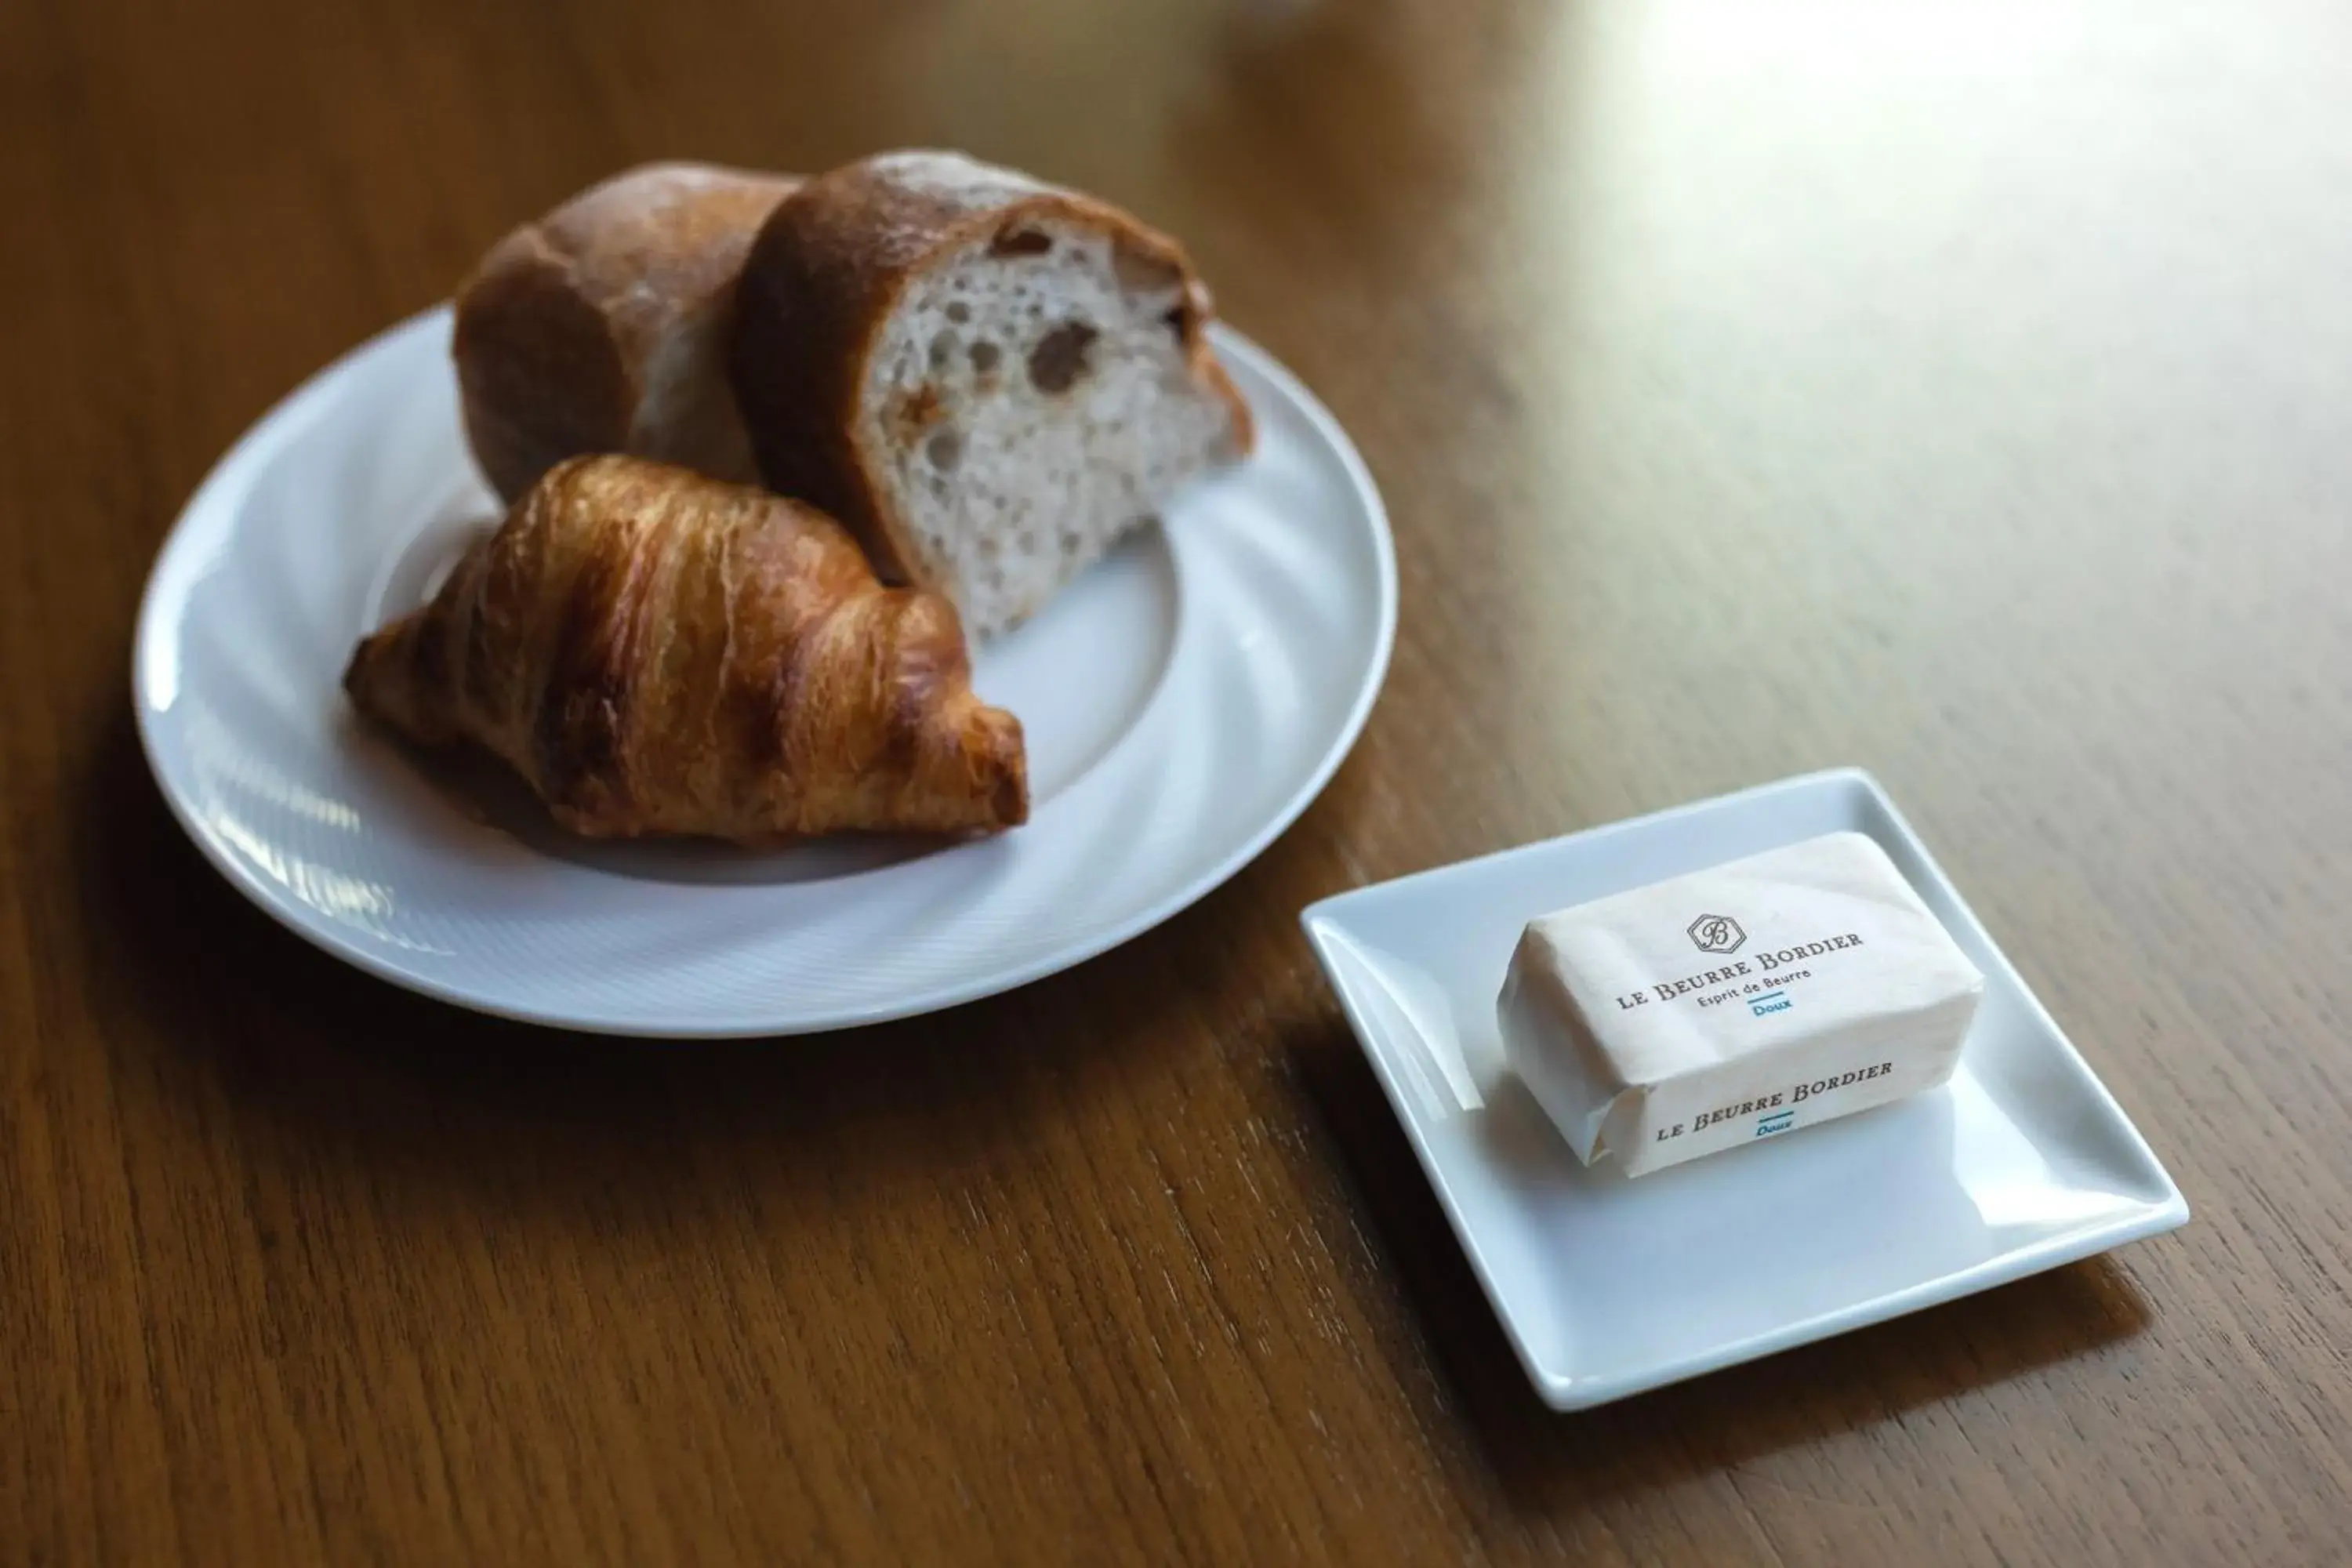 Breakfast in The Gate Hotel Tokyo by Hulic